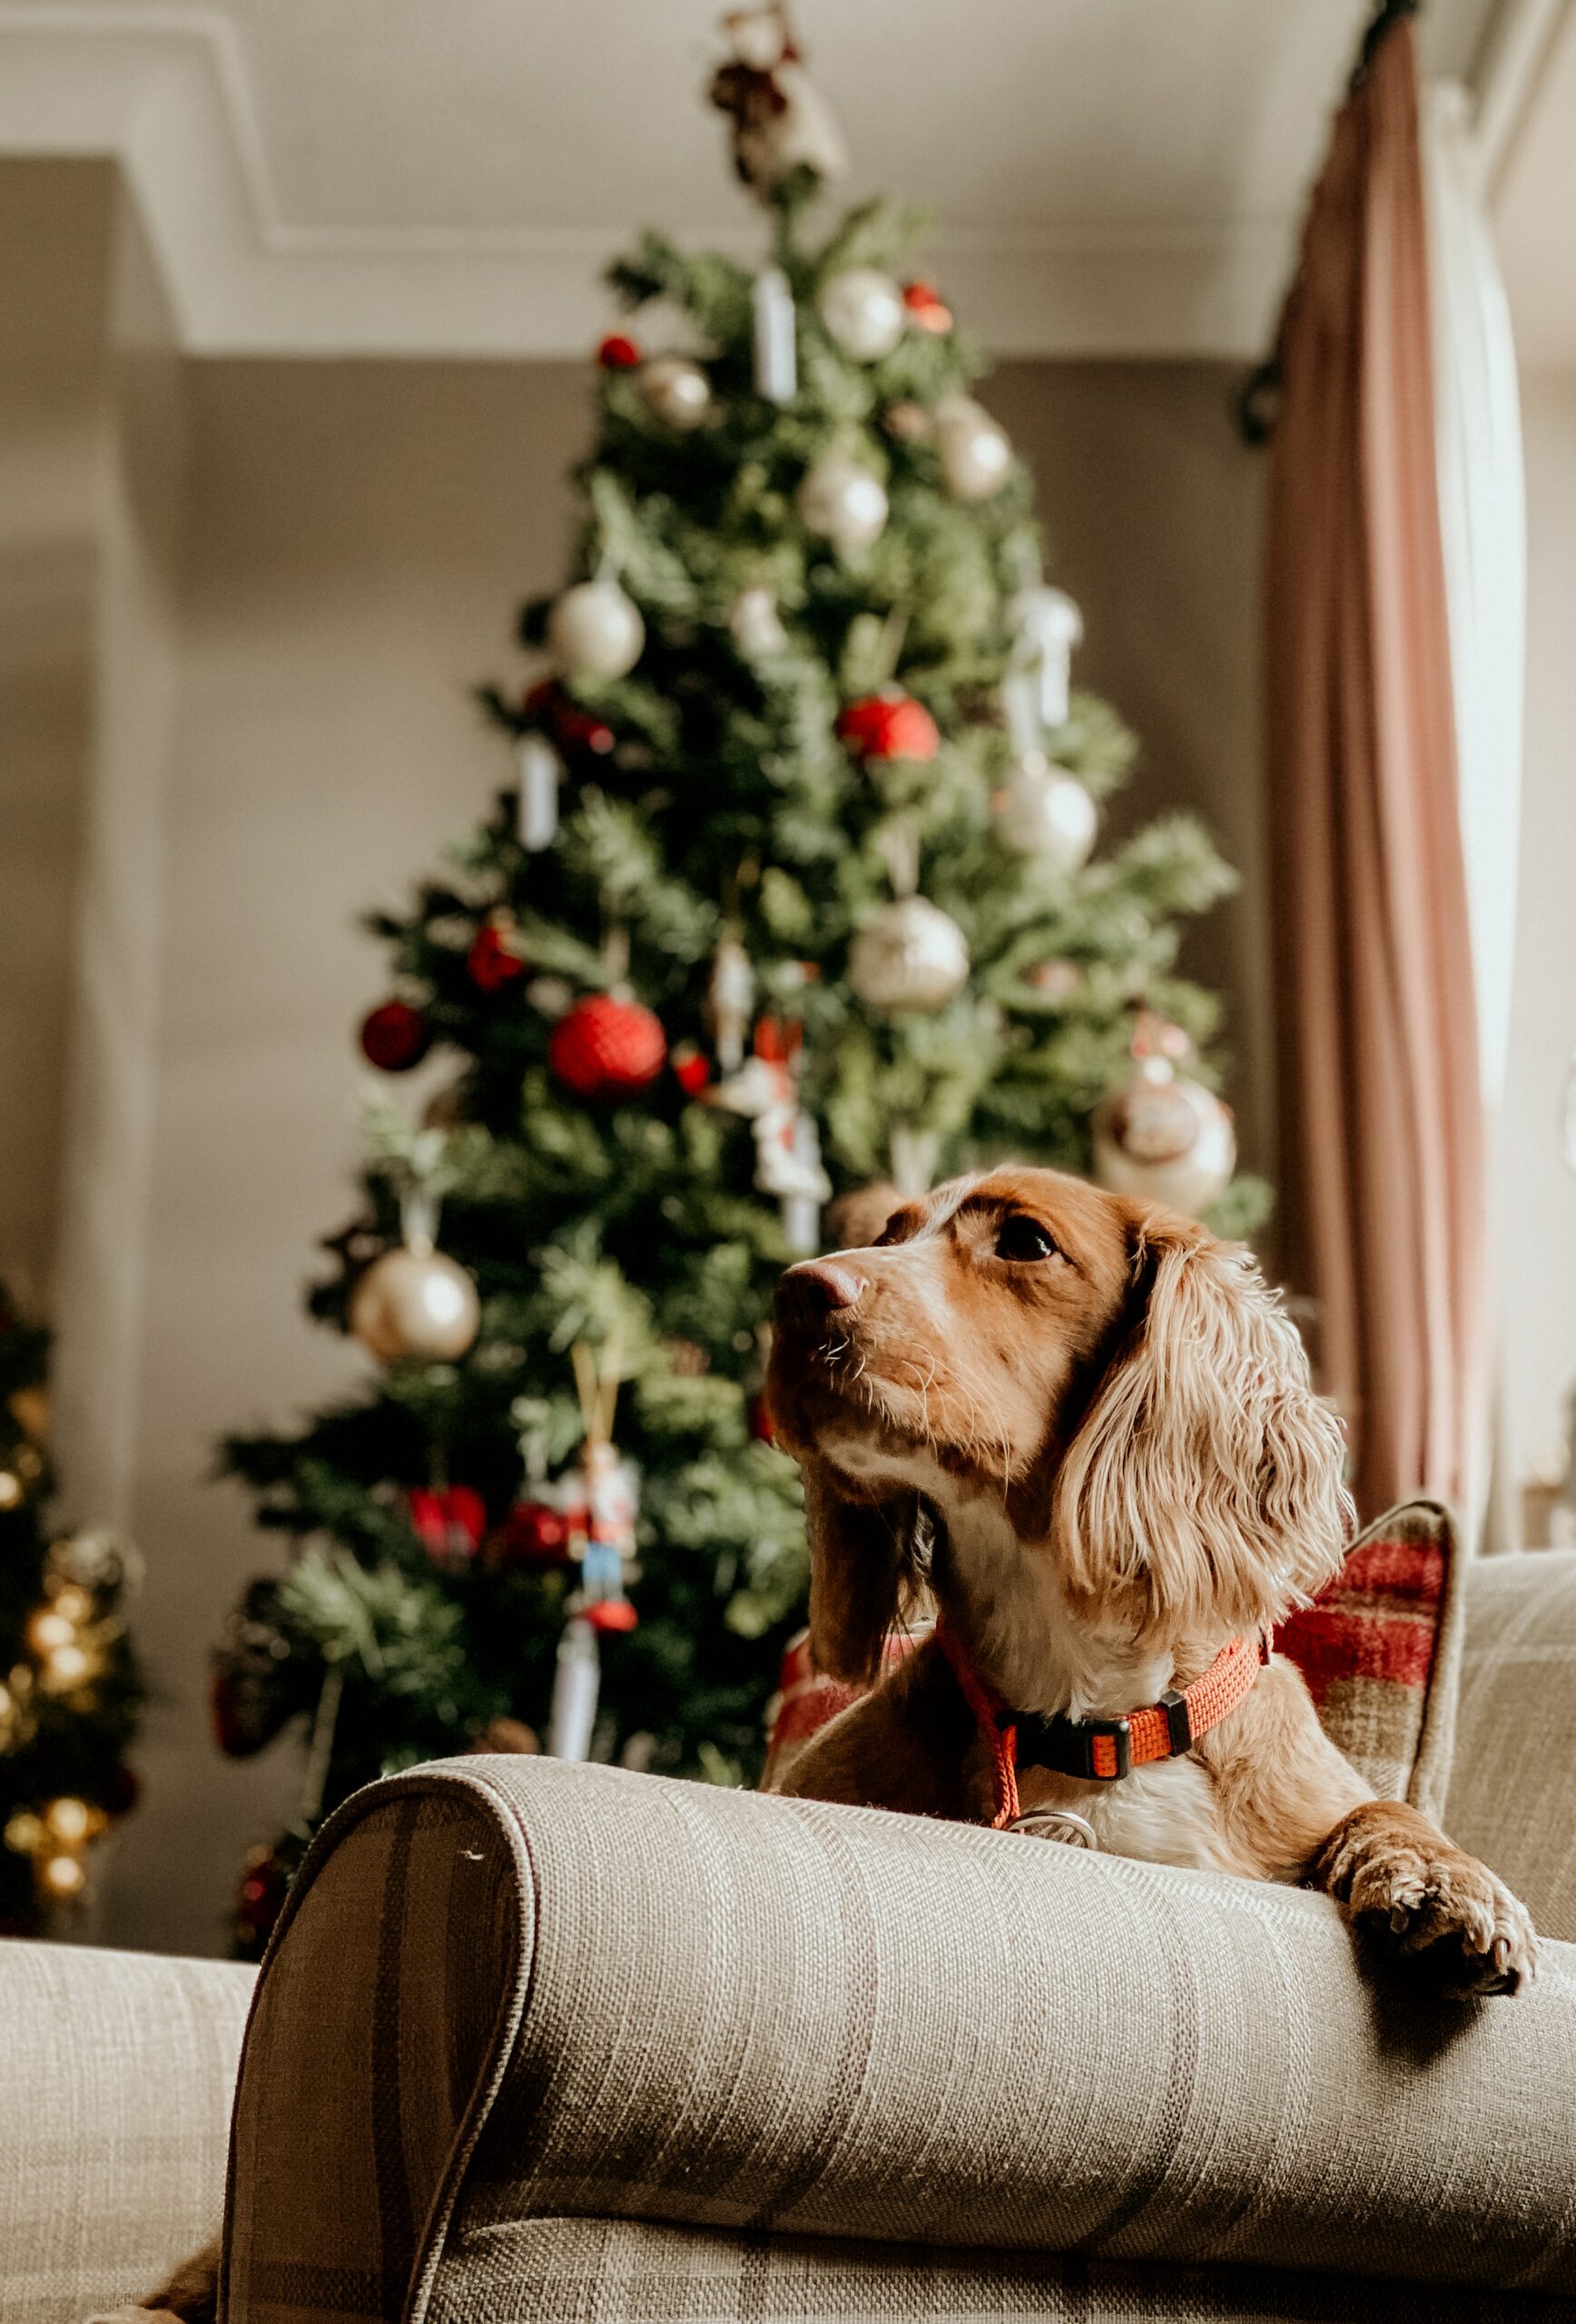 Creating a Dog-Friendly Christmas Wonderland